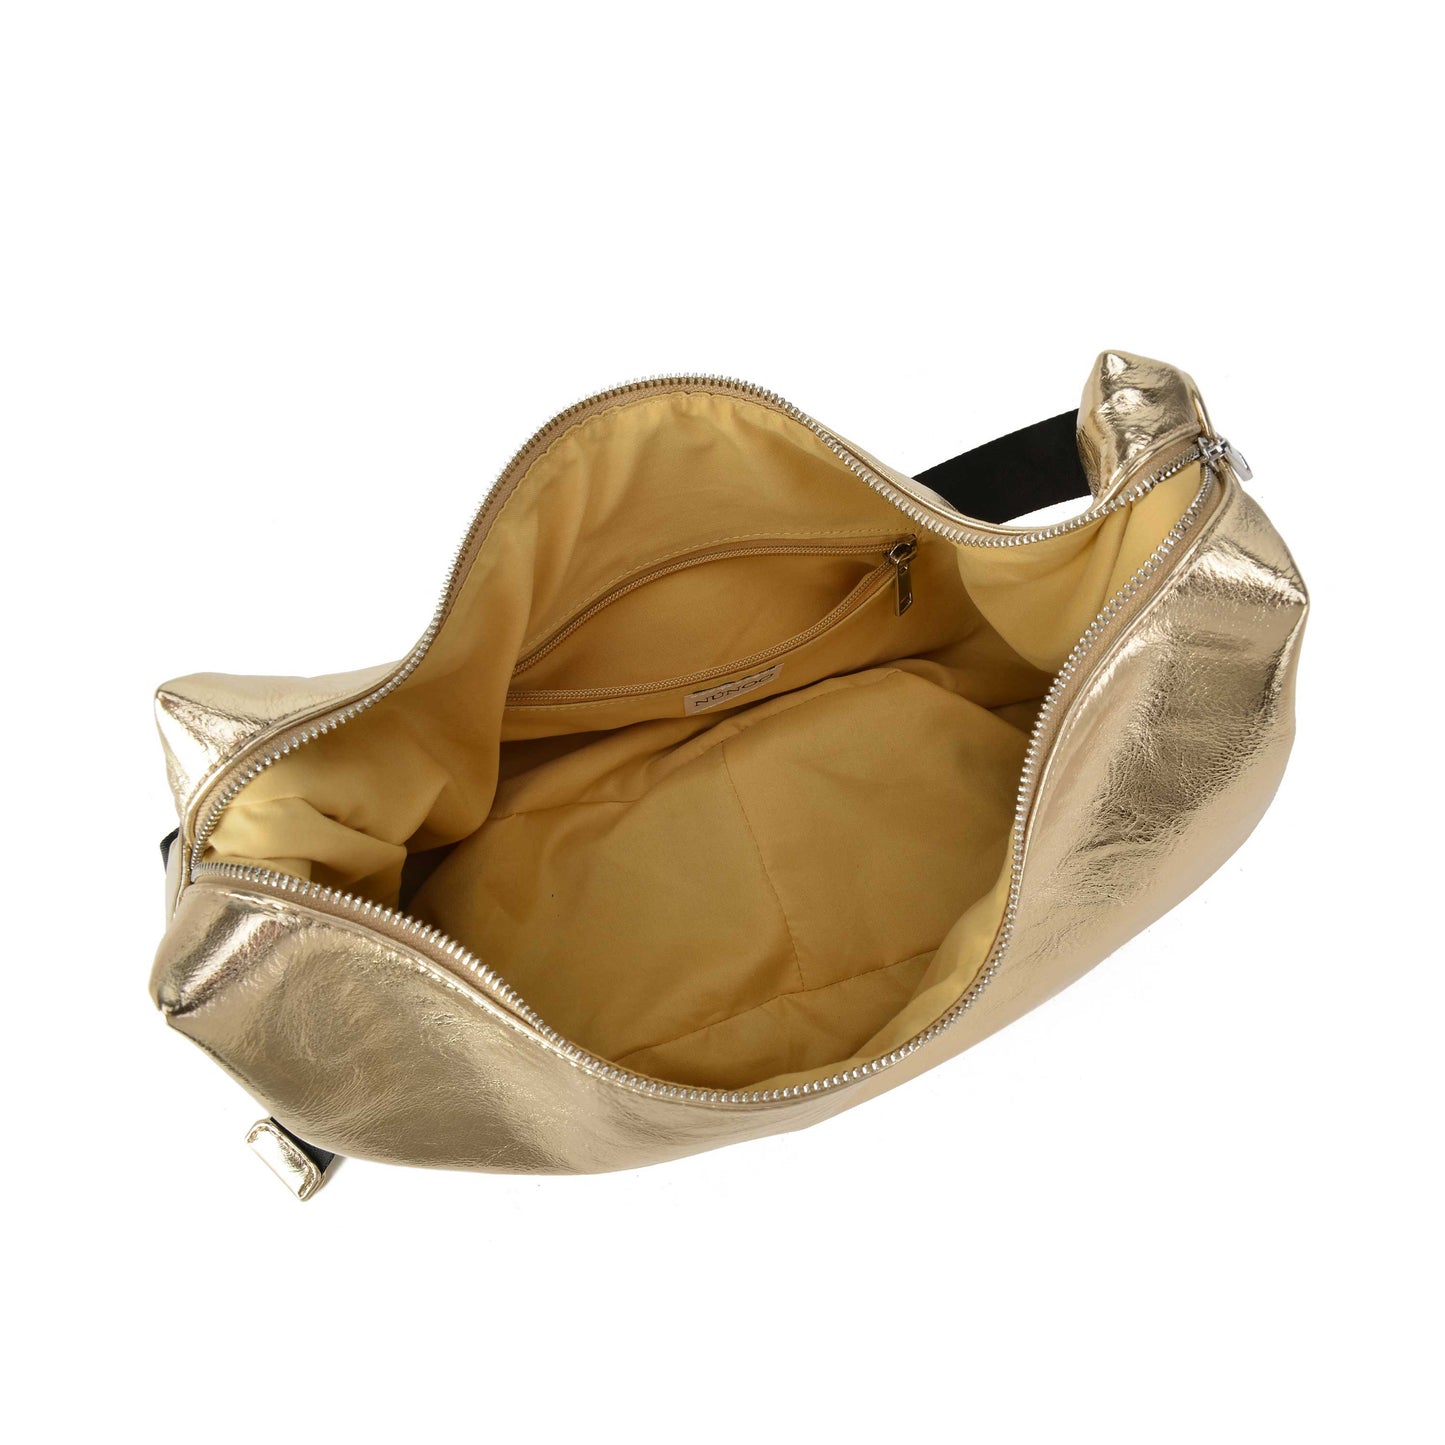 Núnoo Stella recycled cool light gold Shoulder bags Light Gold